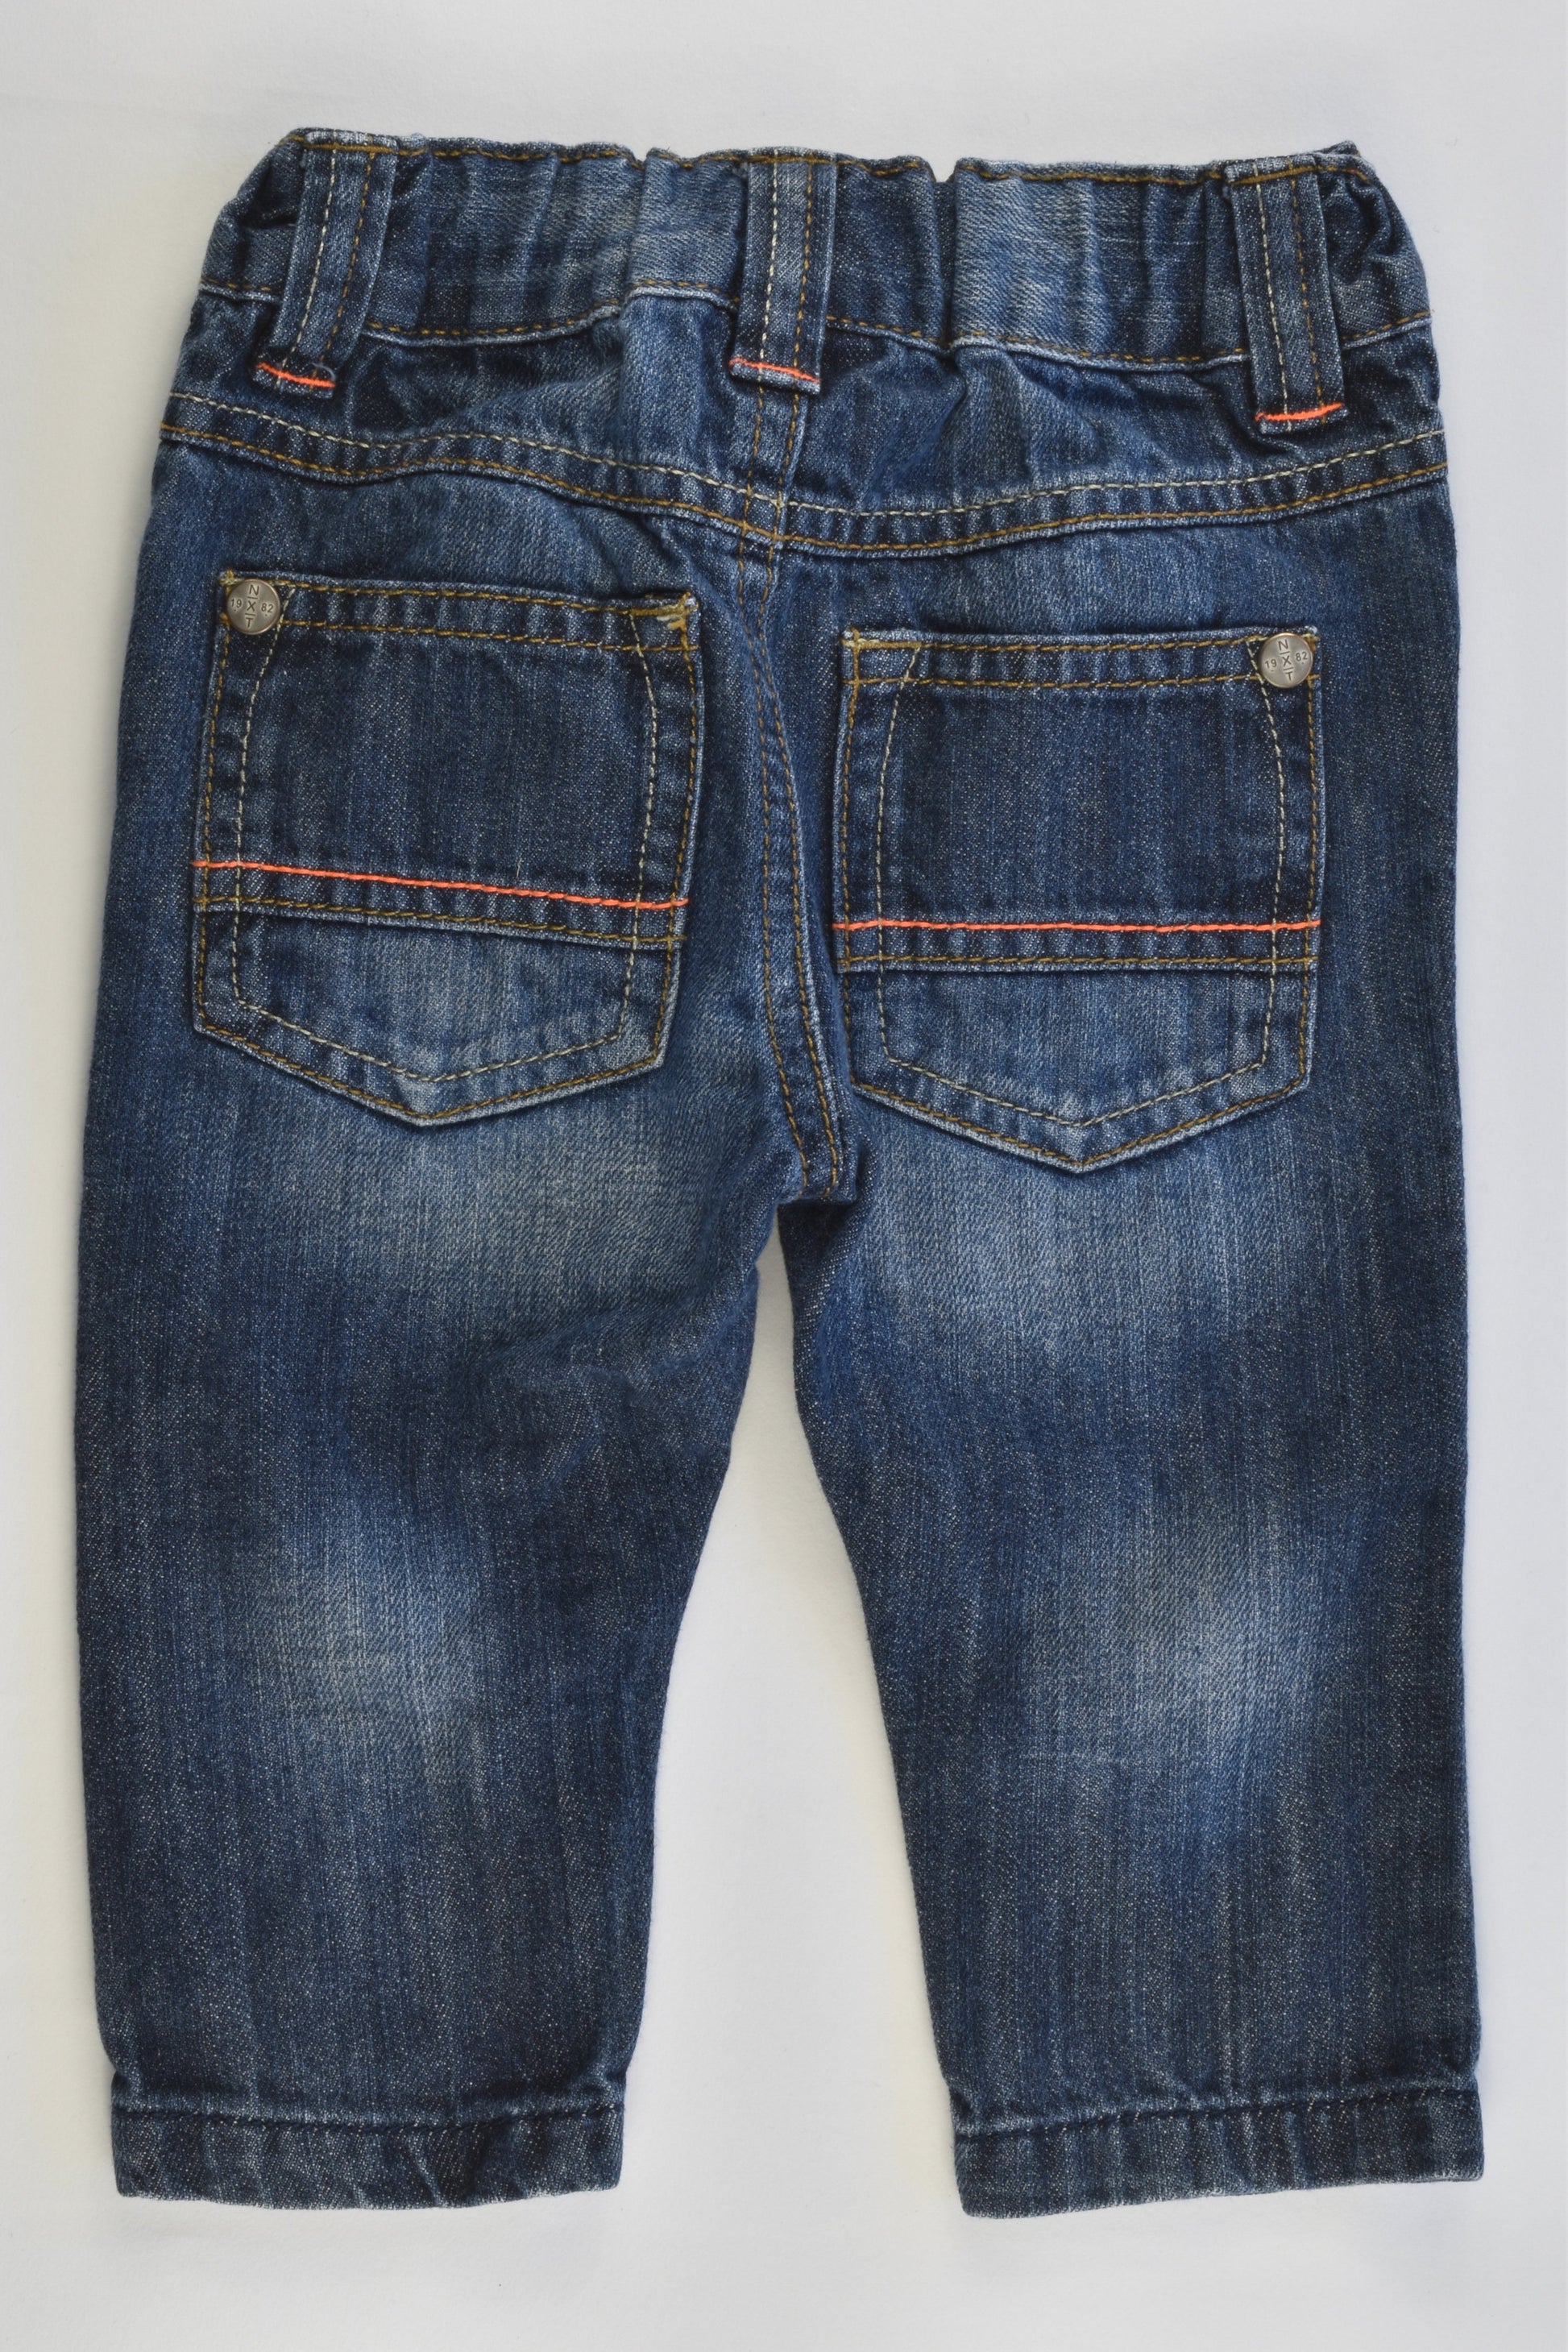 Next (UK) Size 0 (6-9 months) Denim Pants